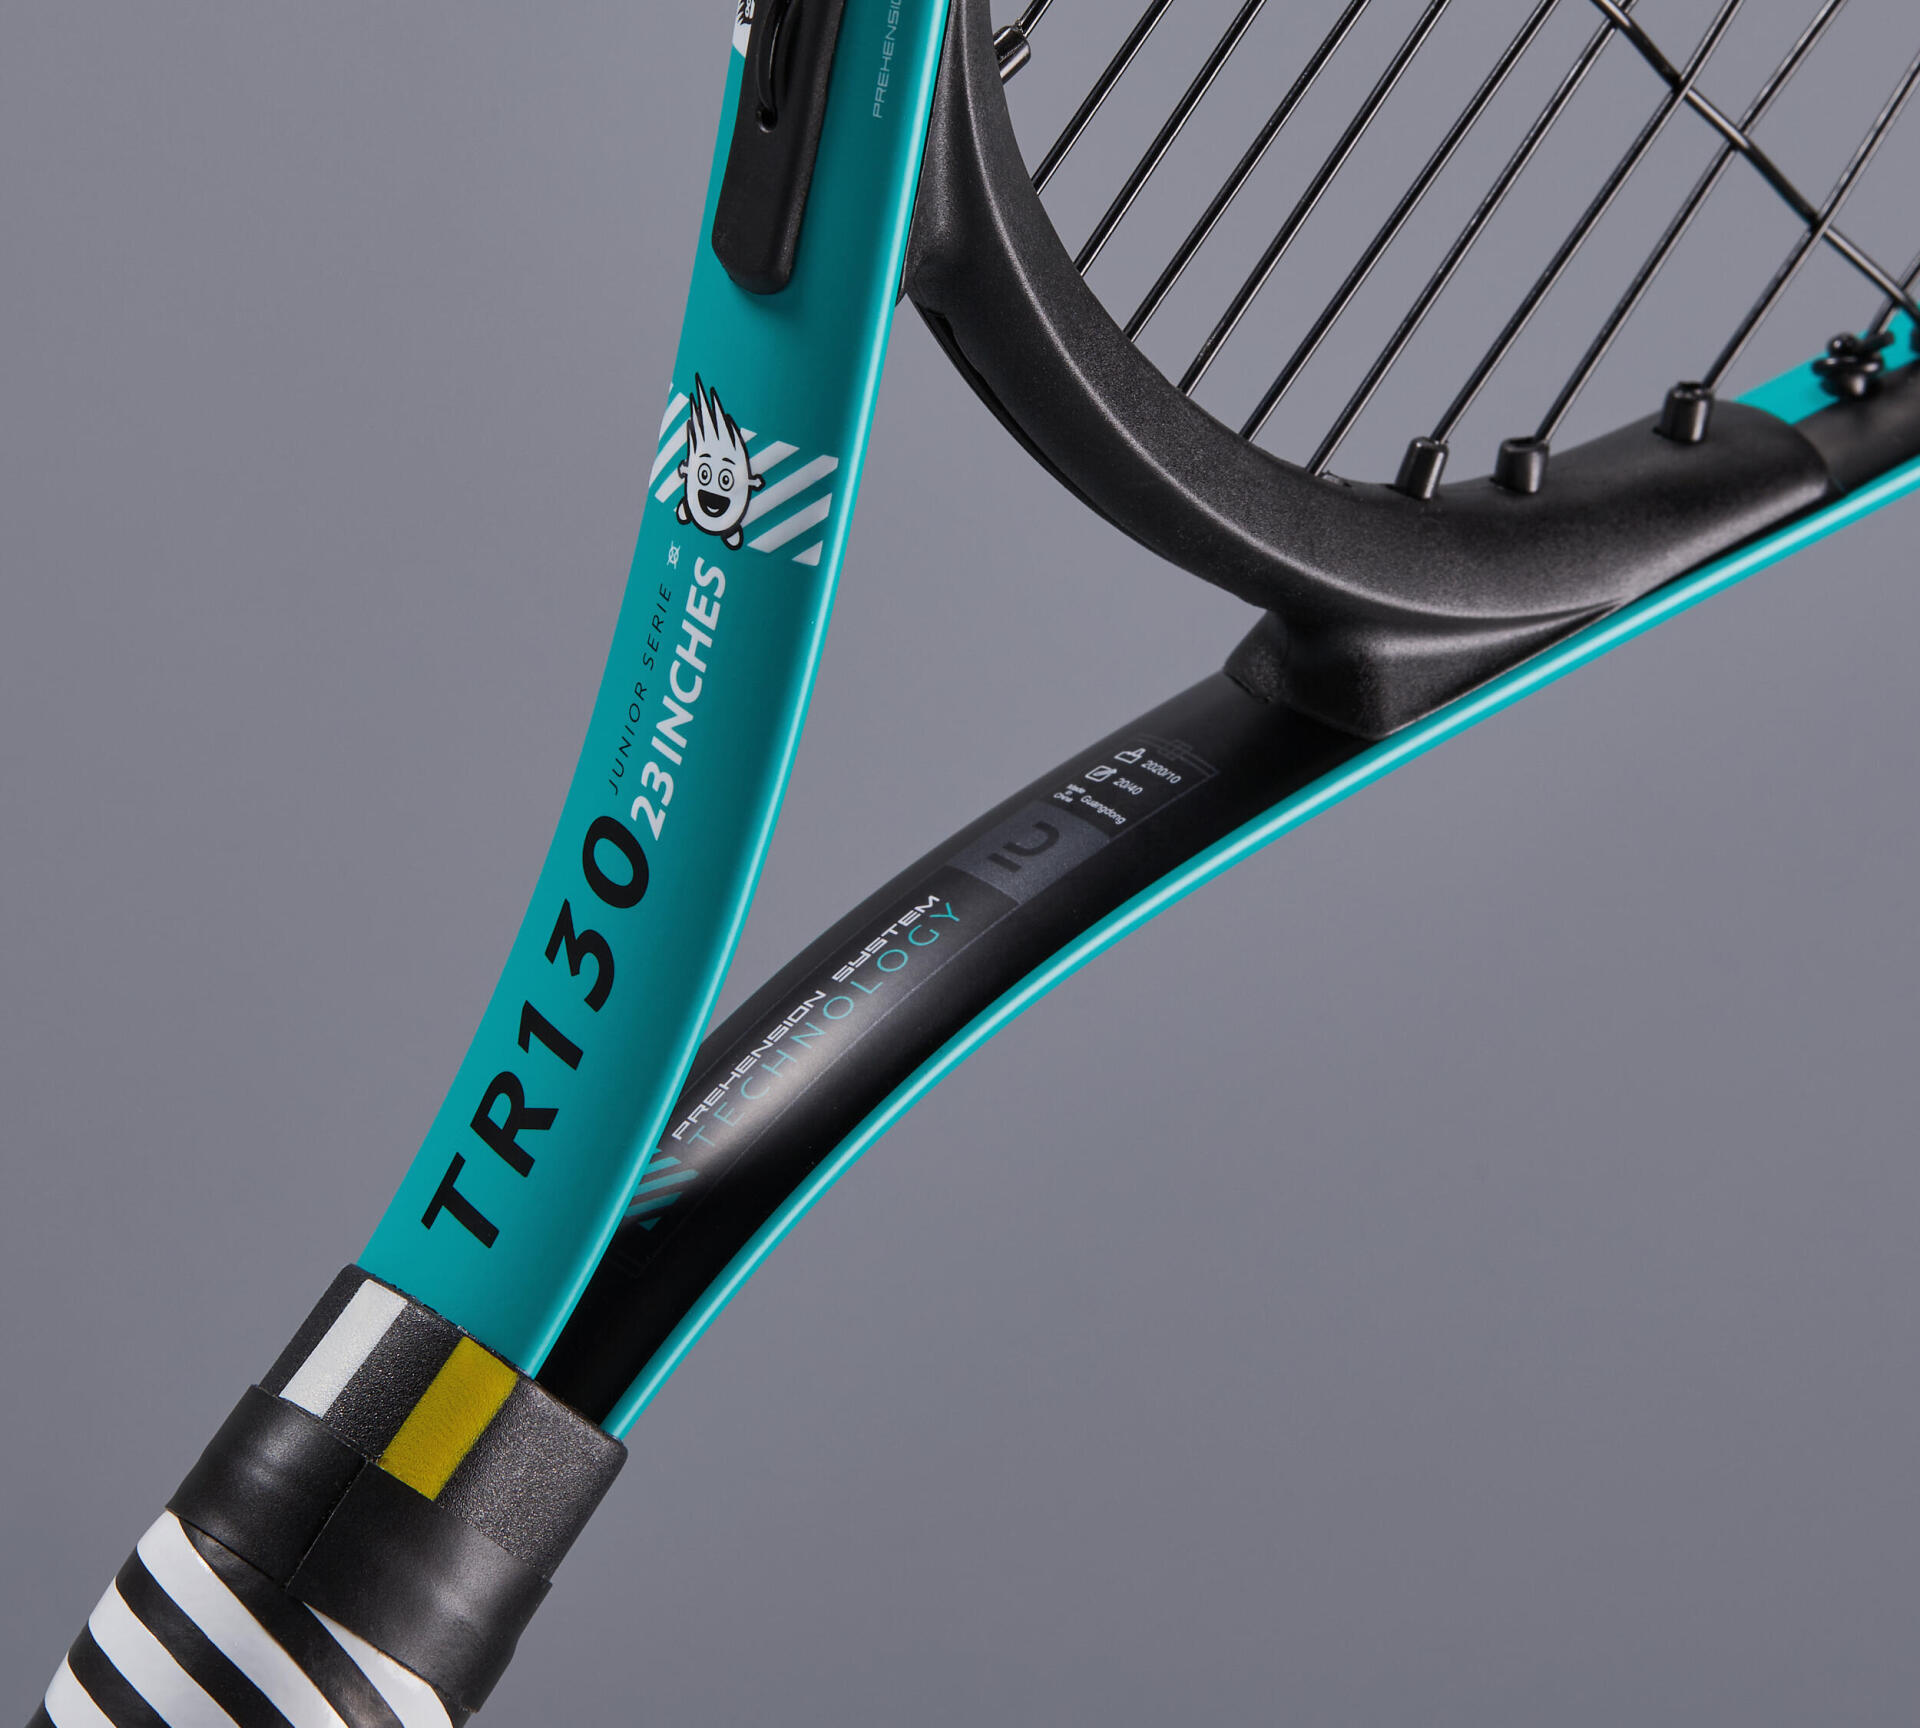 beginner tennis racket